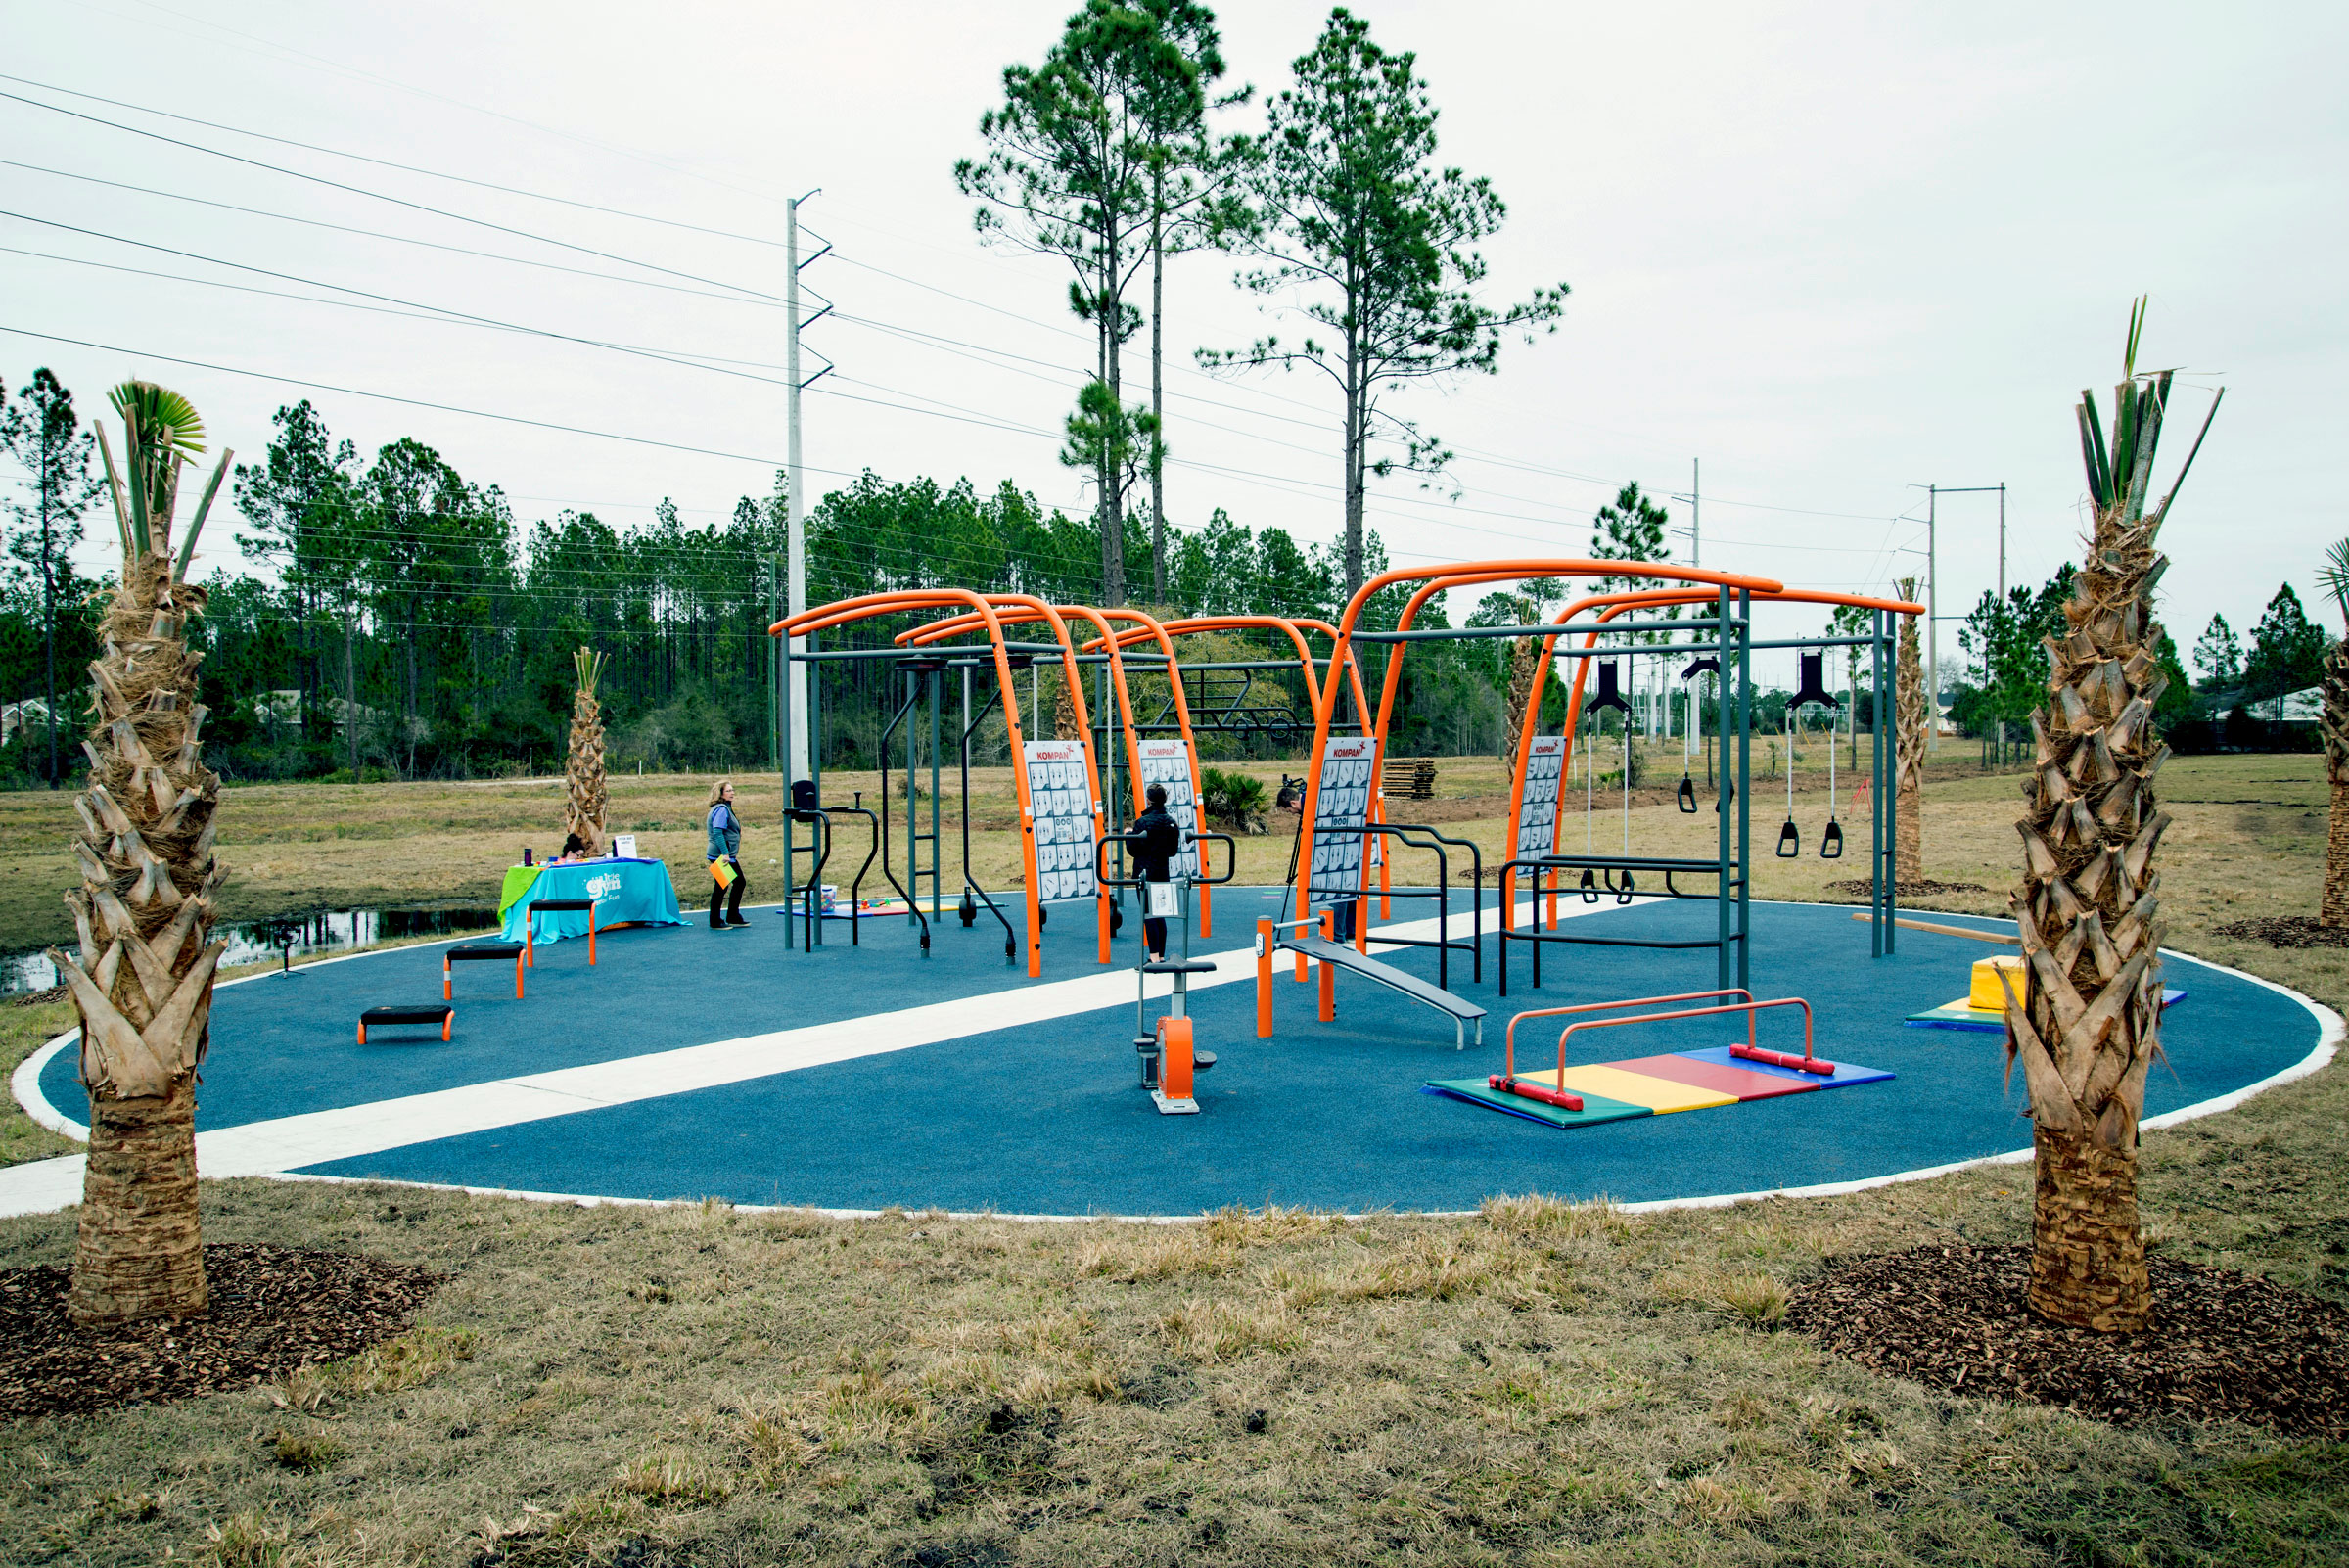 New outdoor gym designed for seniors installed at Kleiner Park